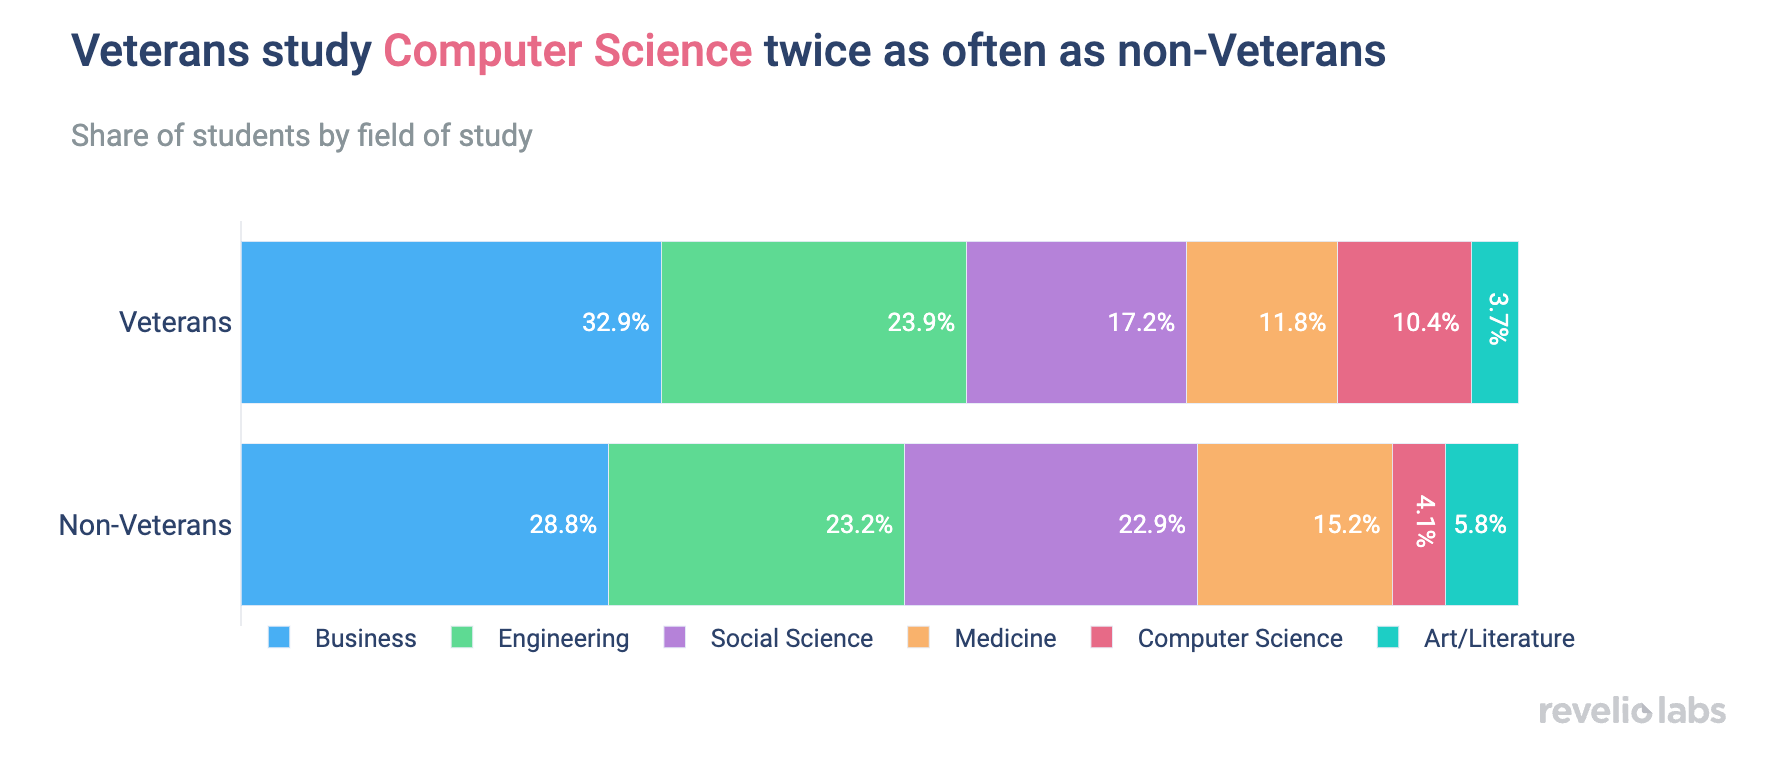 Veterans study computer science twice as often as non-veterans